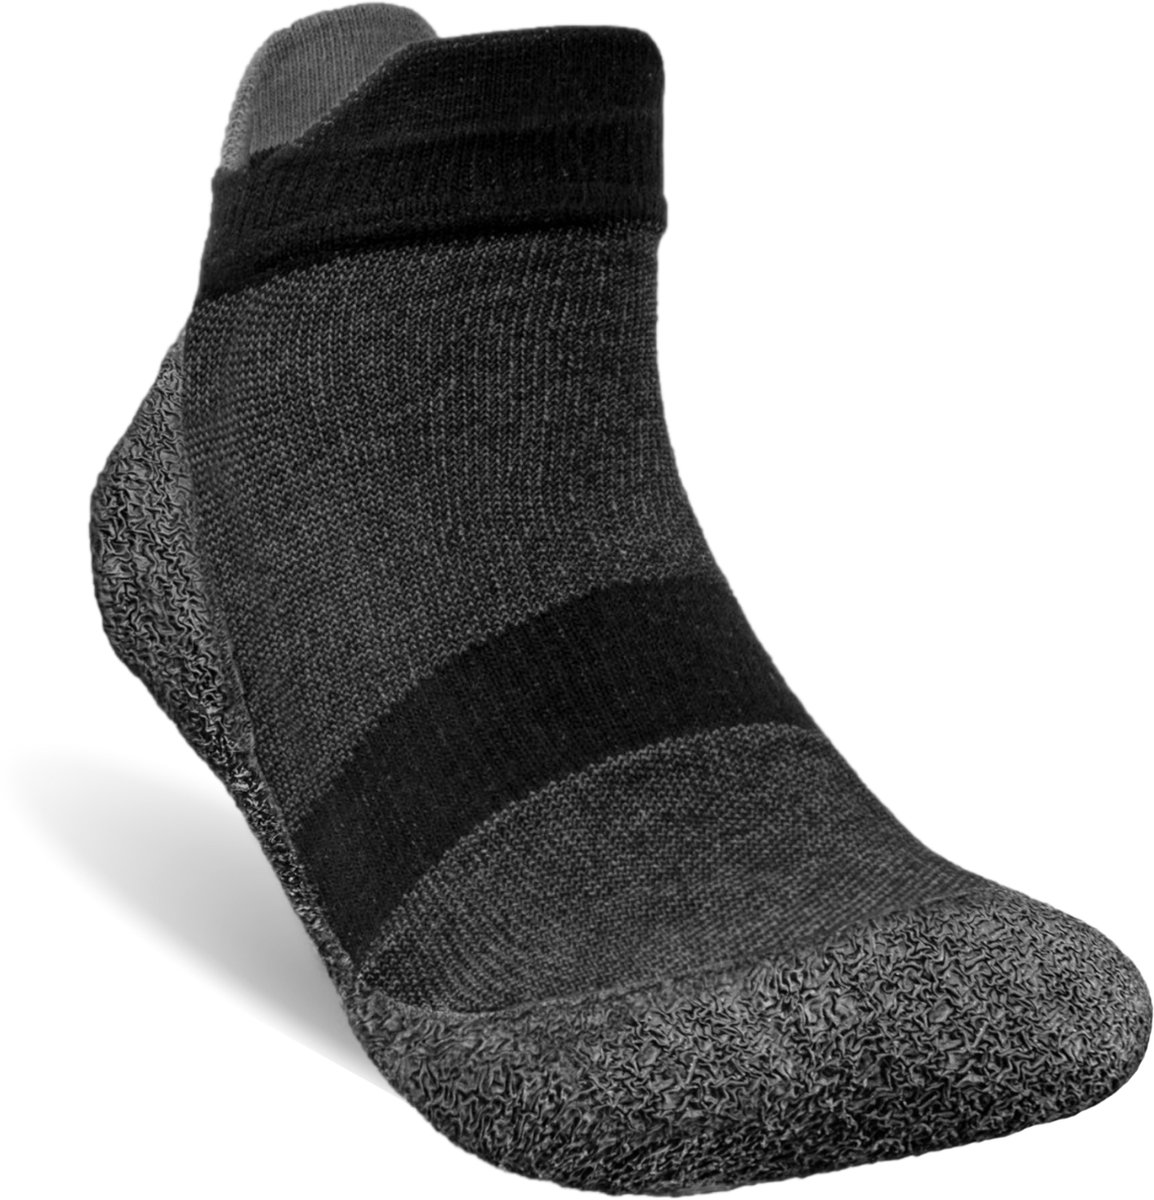 Baresocks 2.0 - Barefoot sokschoen maat 4XS